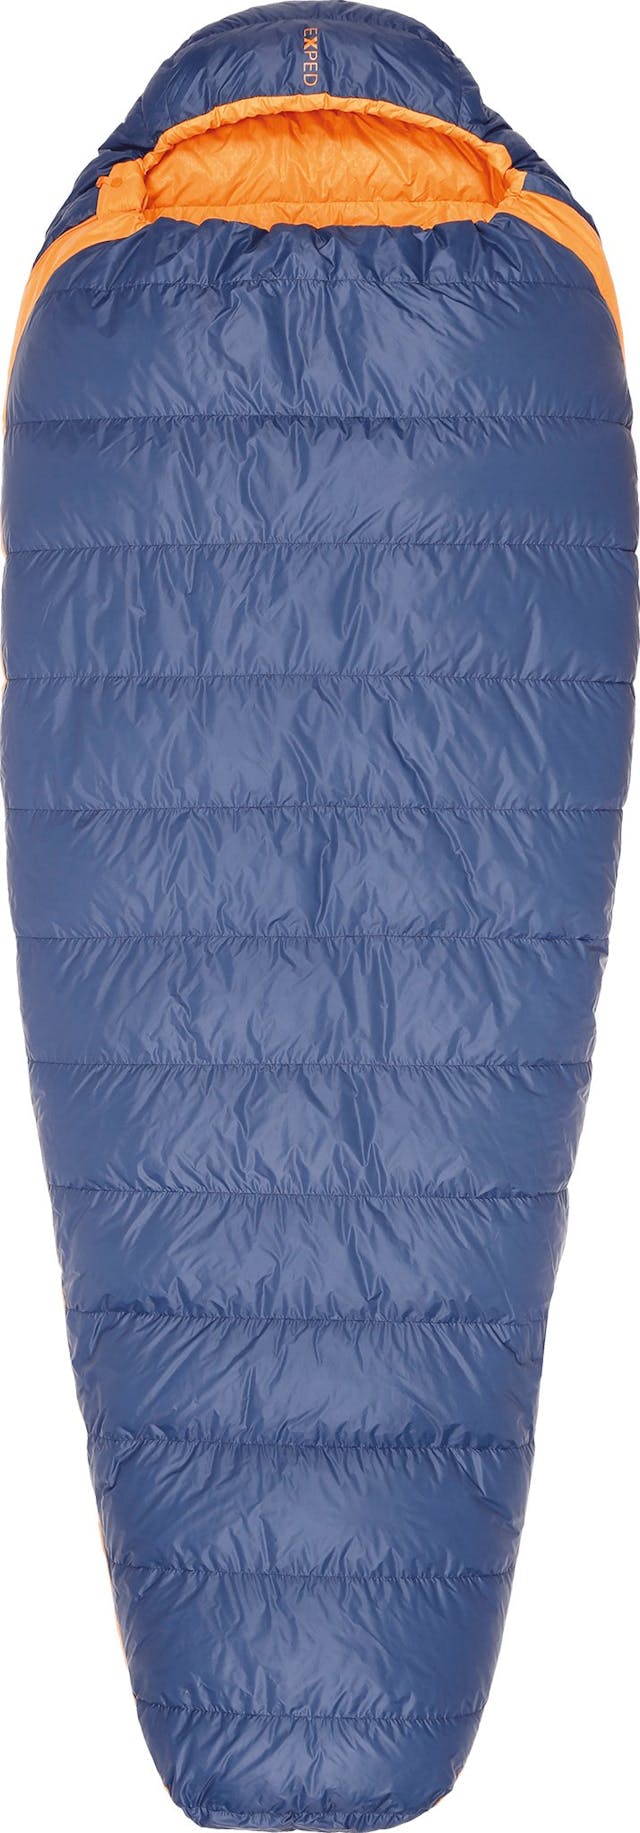 Product image for Comfort Sleeping Bag 0°C/32°F - Unisex